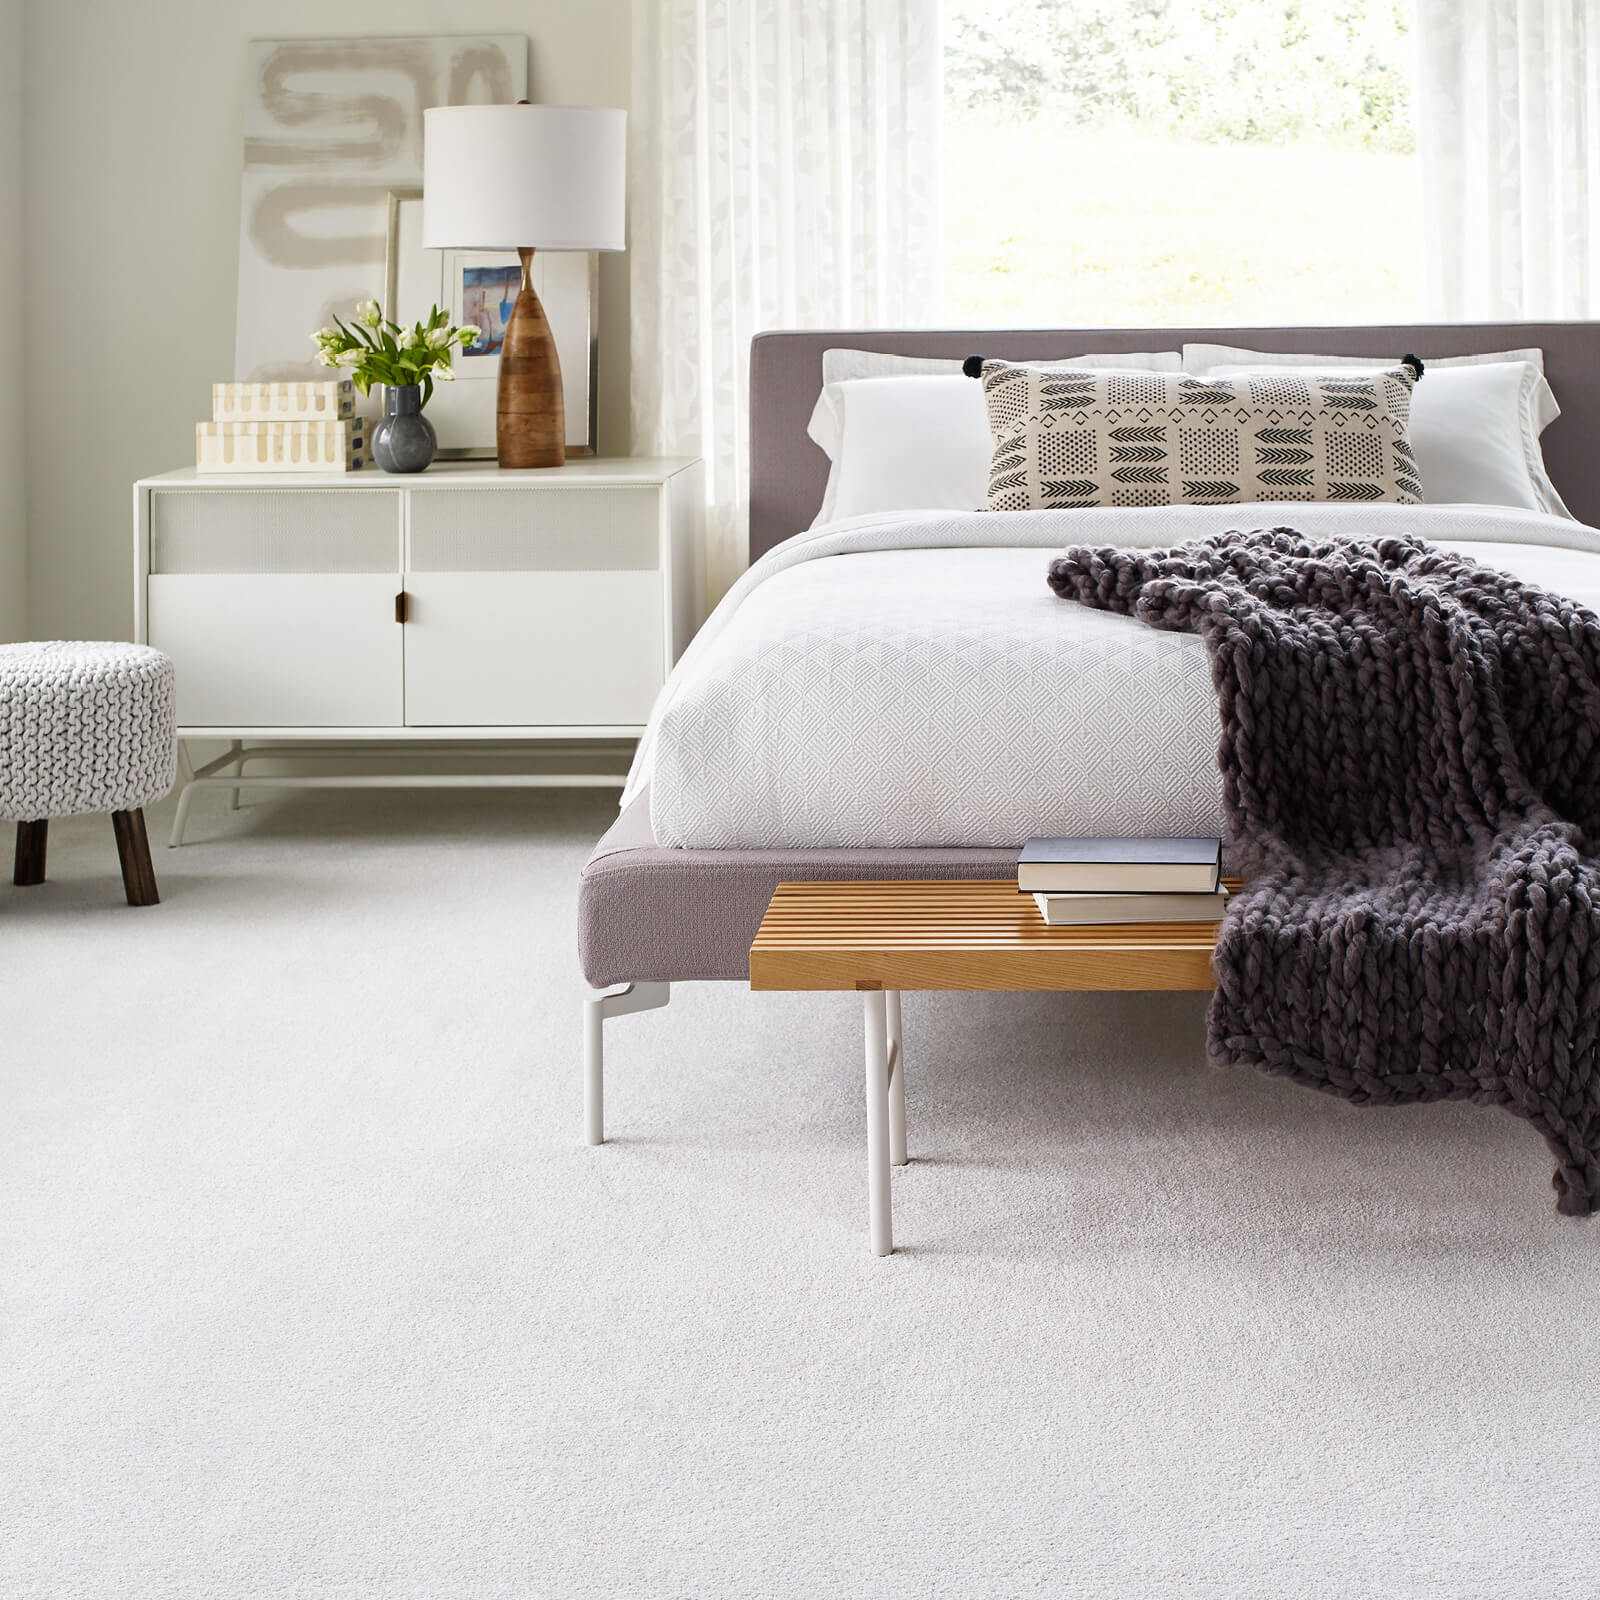 White bedroom interior | We'll Floor You